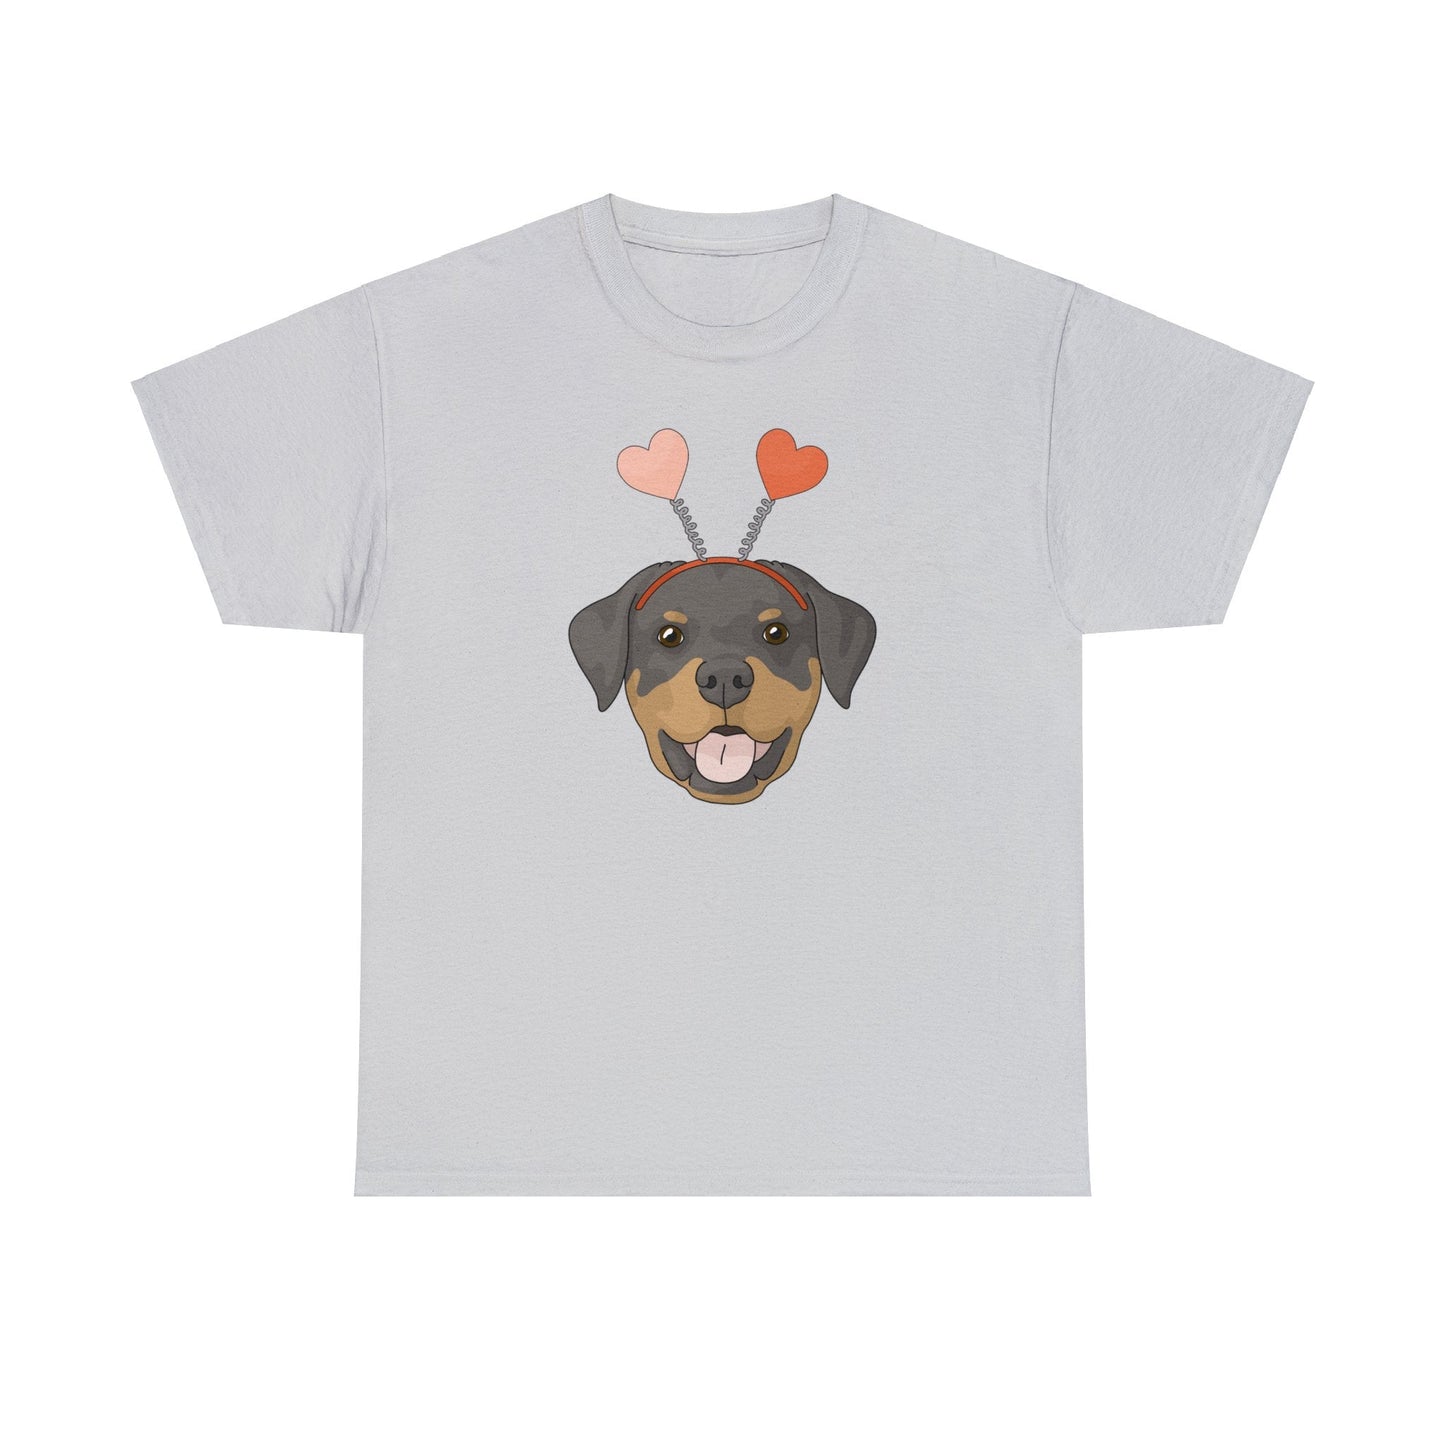 A Very Rottie Valentine | Unisex T-shirt - Detezi Designs-10495370740899082659